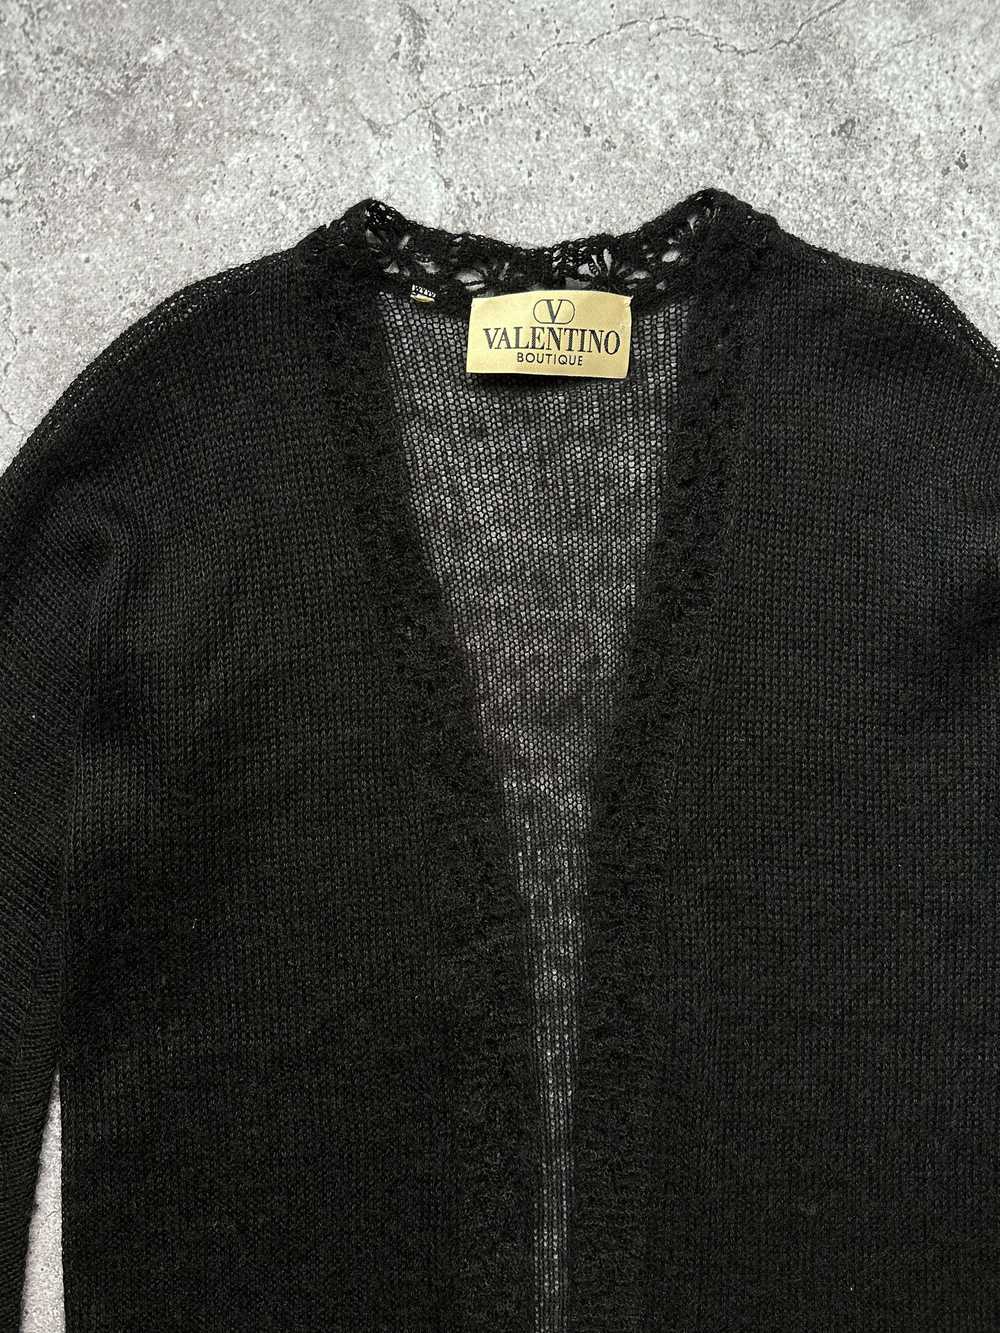 Valentino Valentino Boutique Knit Cardigan Sweater - image 4